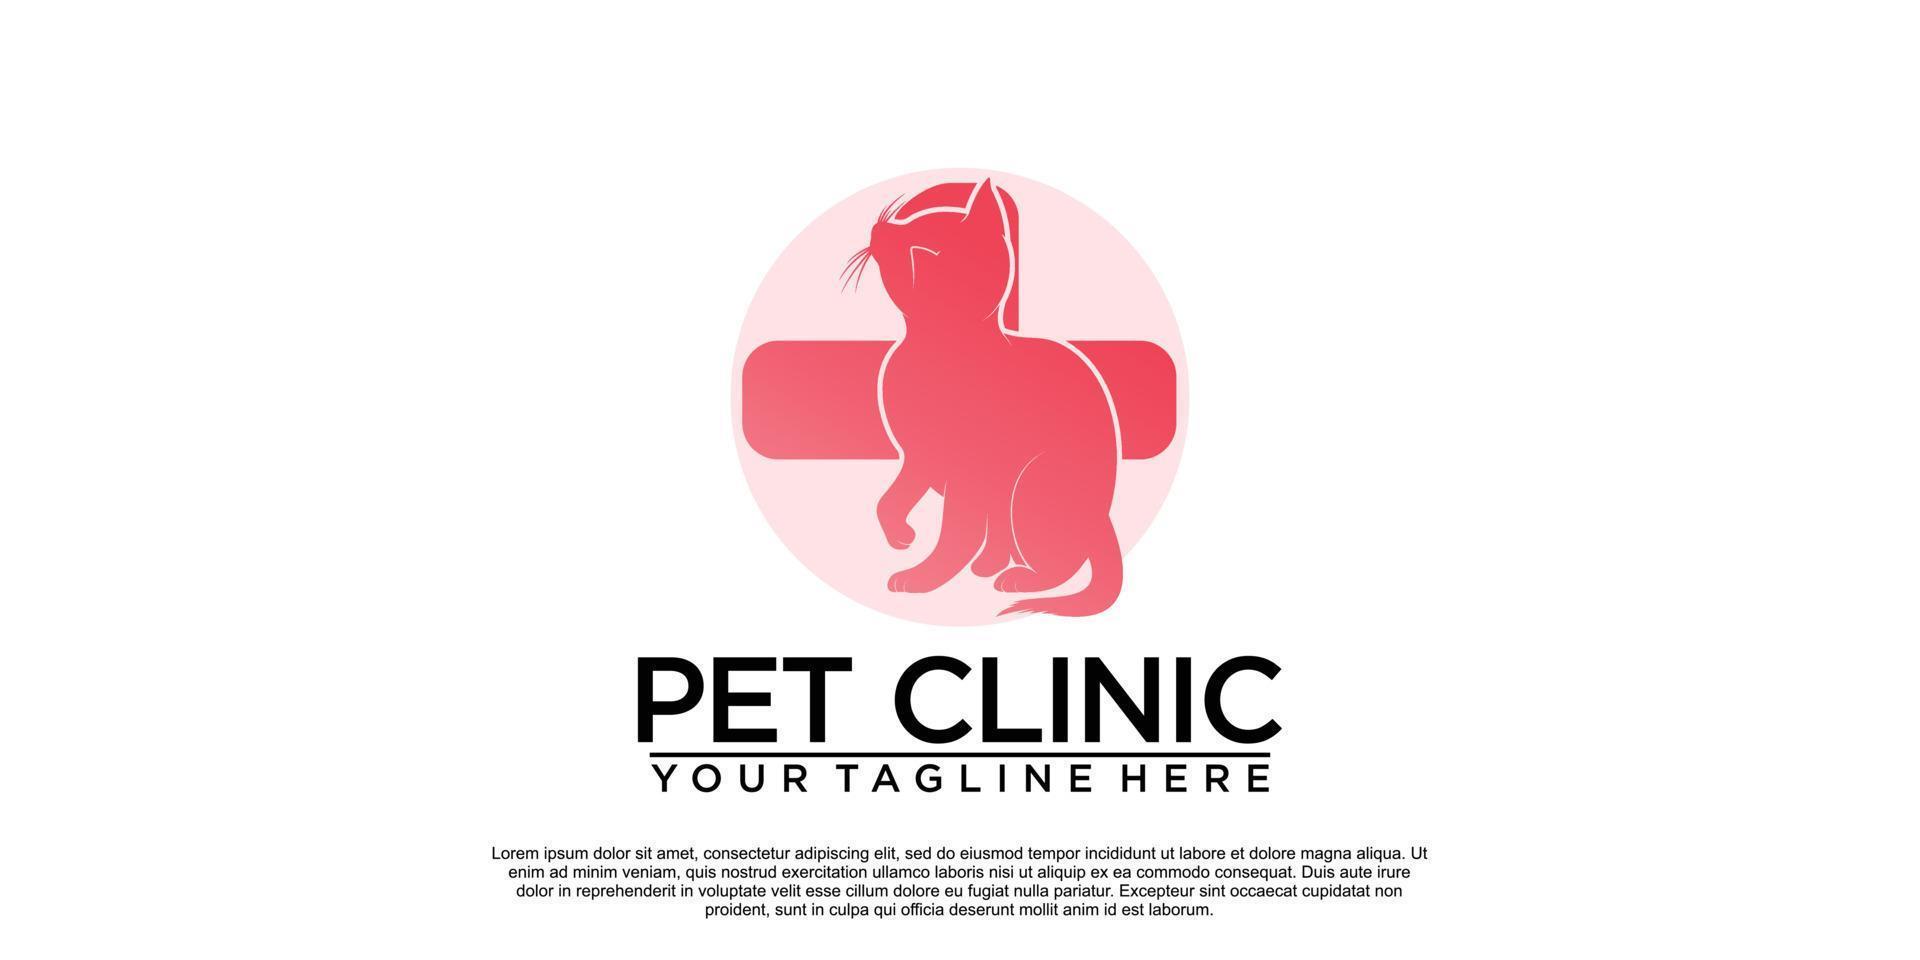 Pet clinic logo design with creative unique style Premium Vector part 2